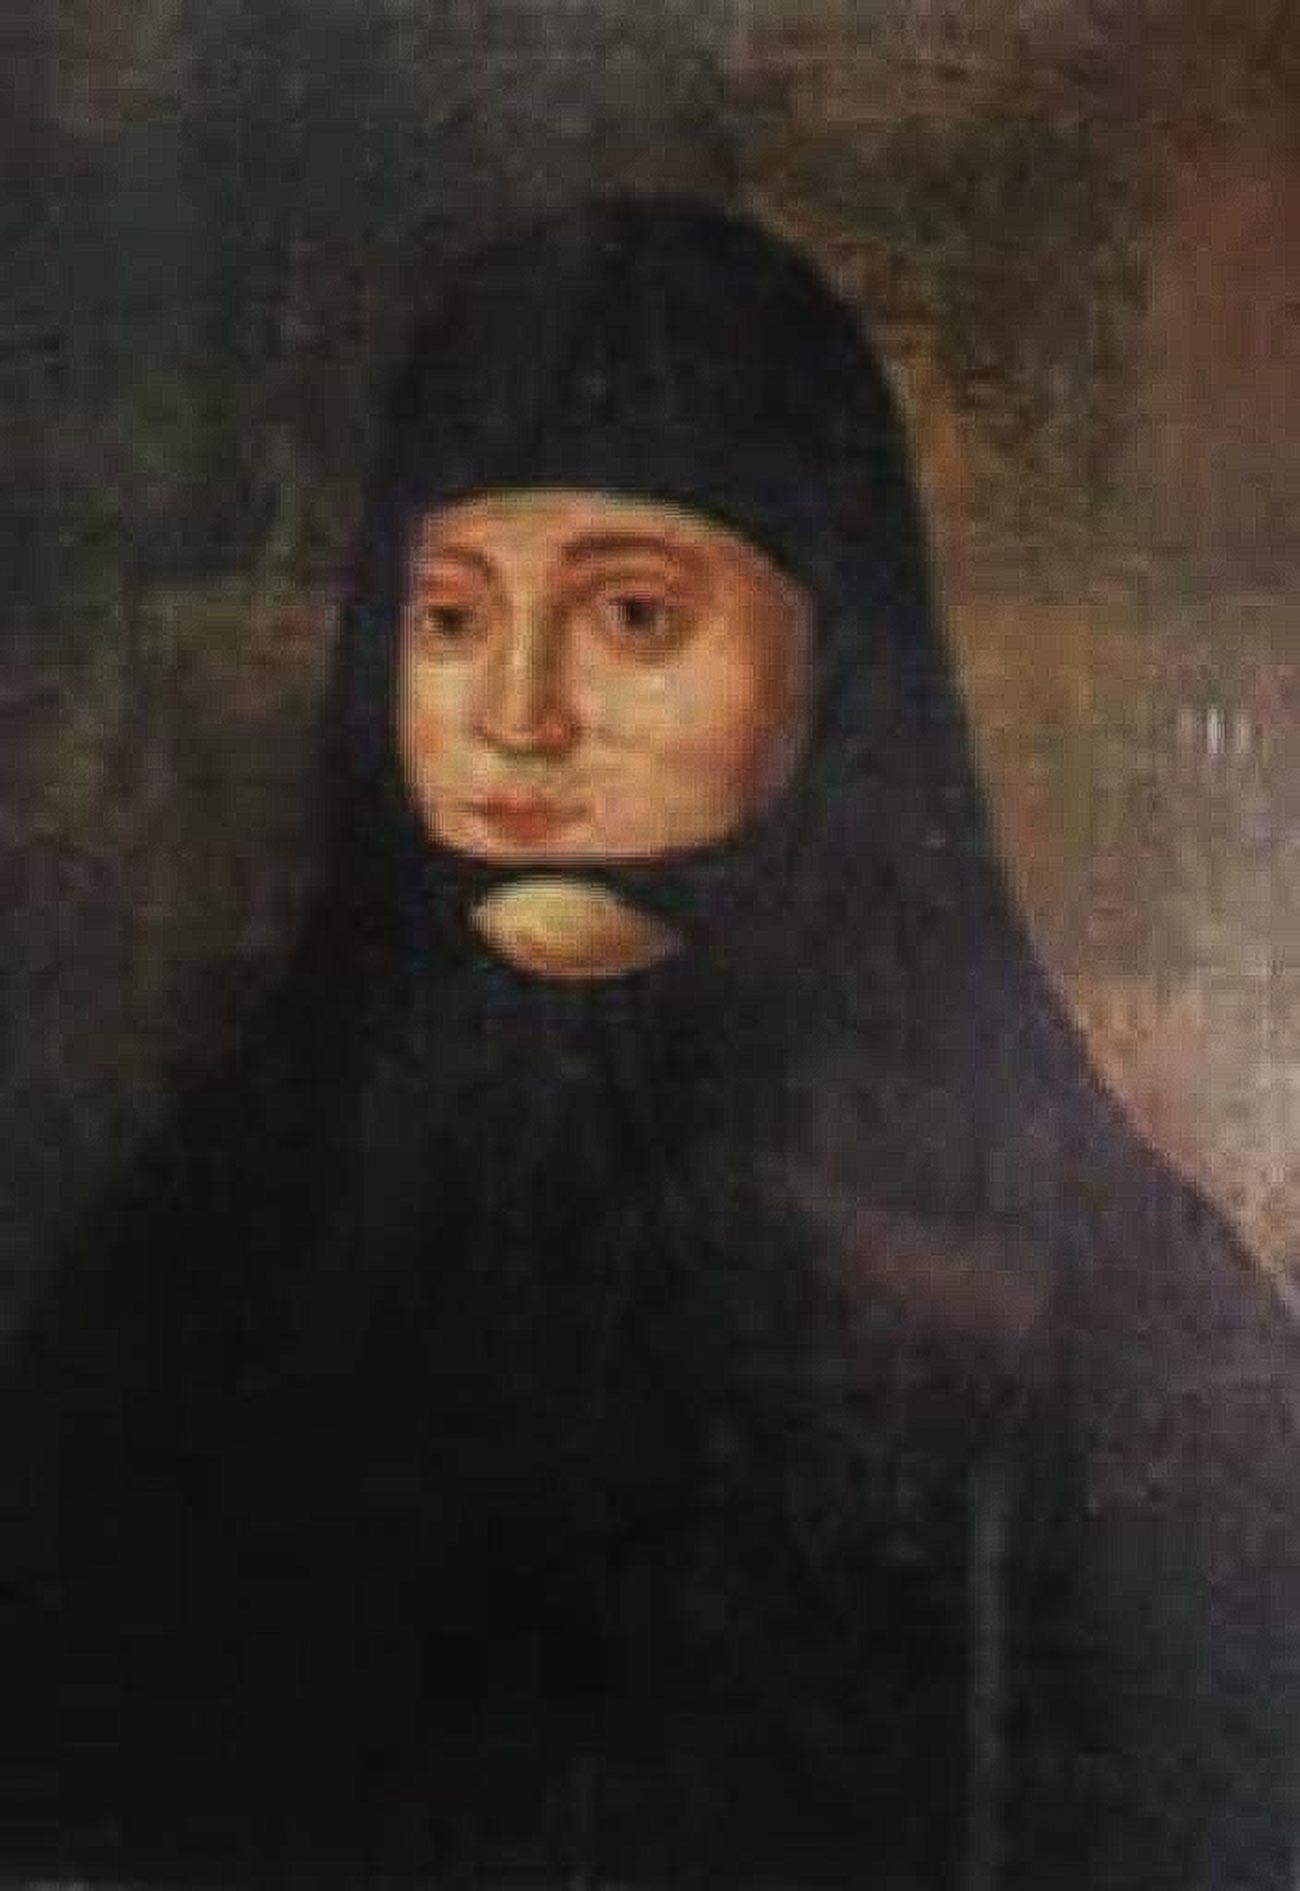 Solomonia Saburova, istri pertama Pangeran Agung Vasily III, menjadi biarawati di Biara Syafaat Suzdal.